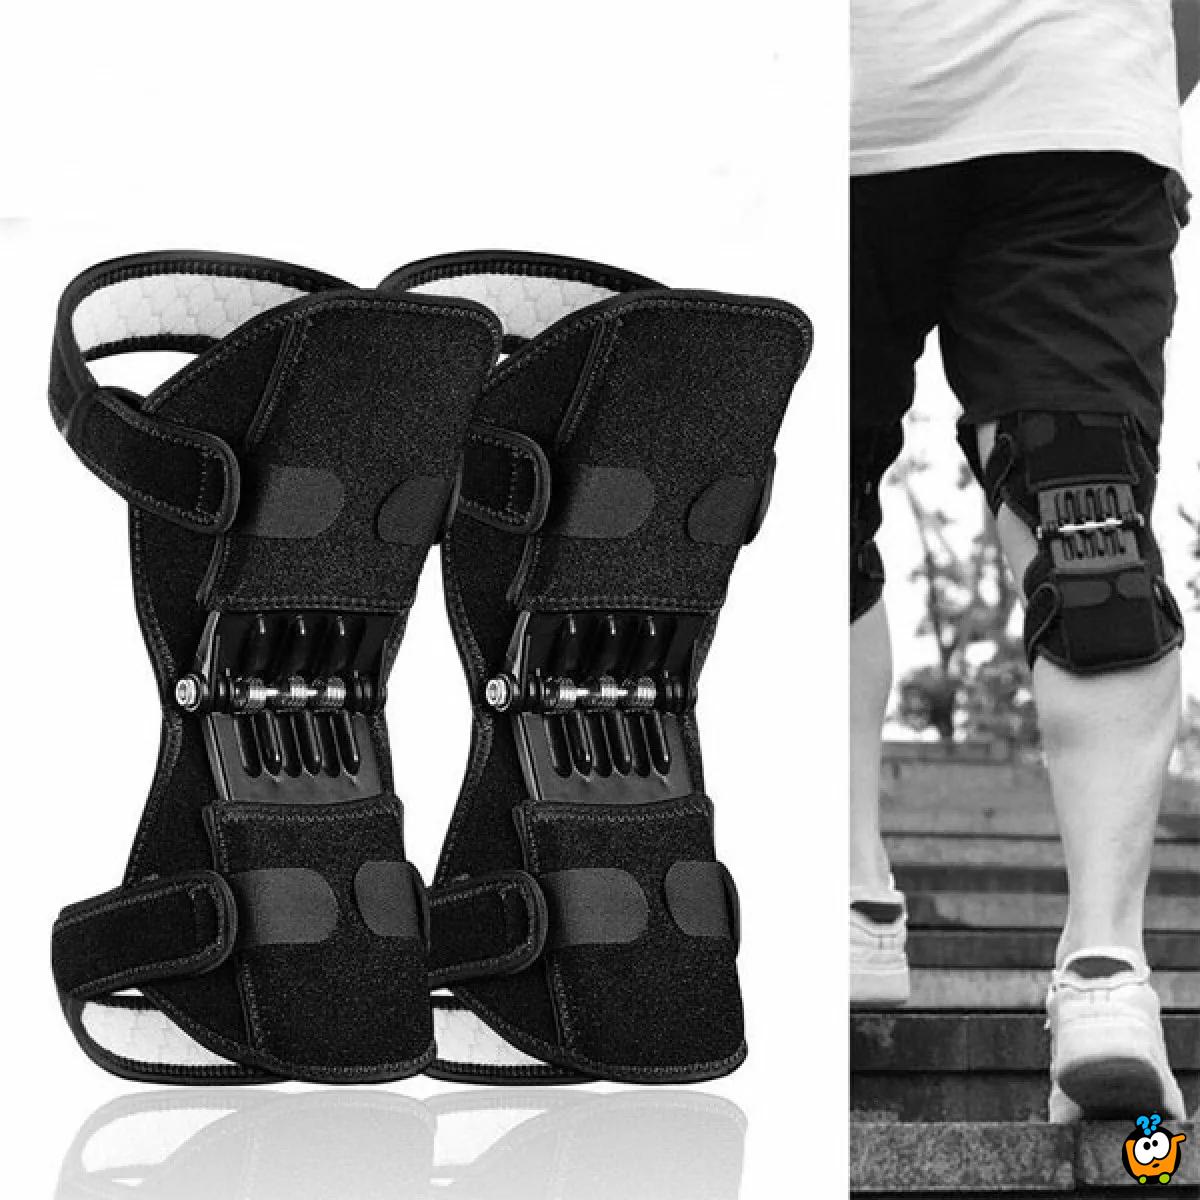 Knee Booster - Potporna proteza za koleno za lako i bezbolno kretanje